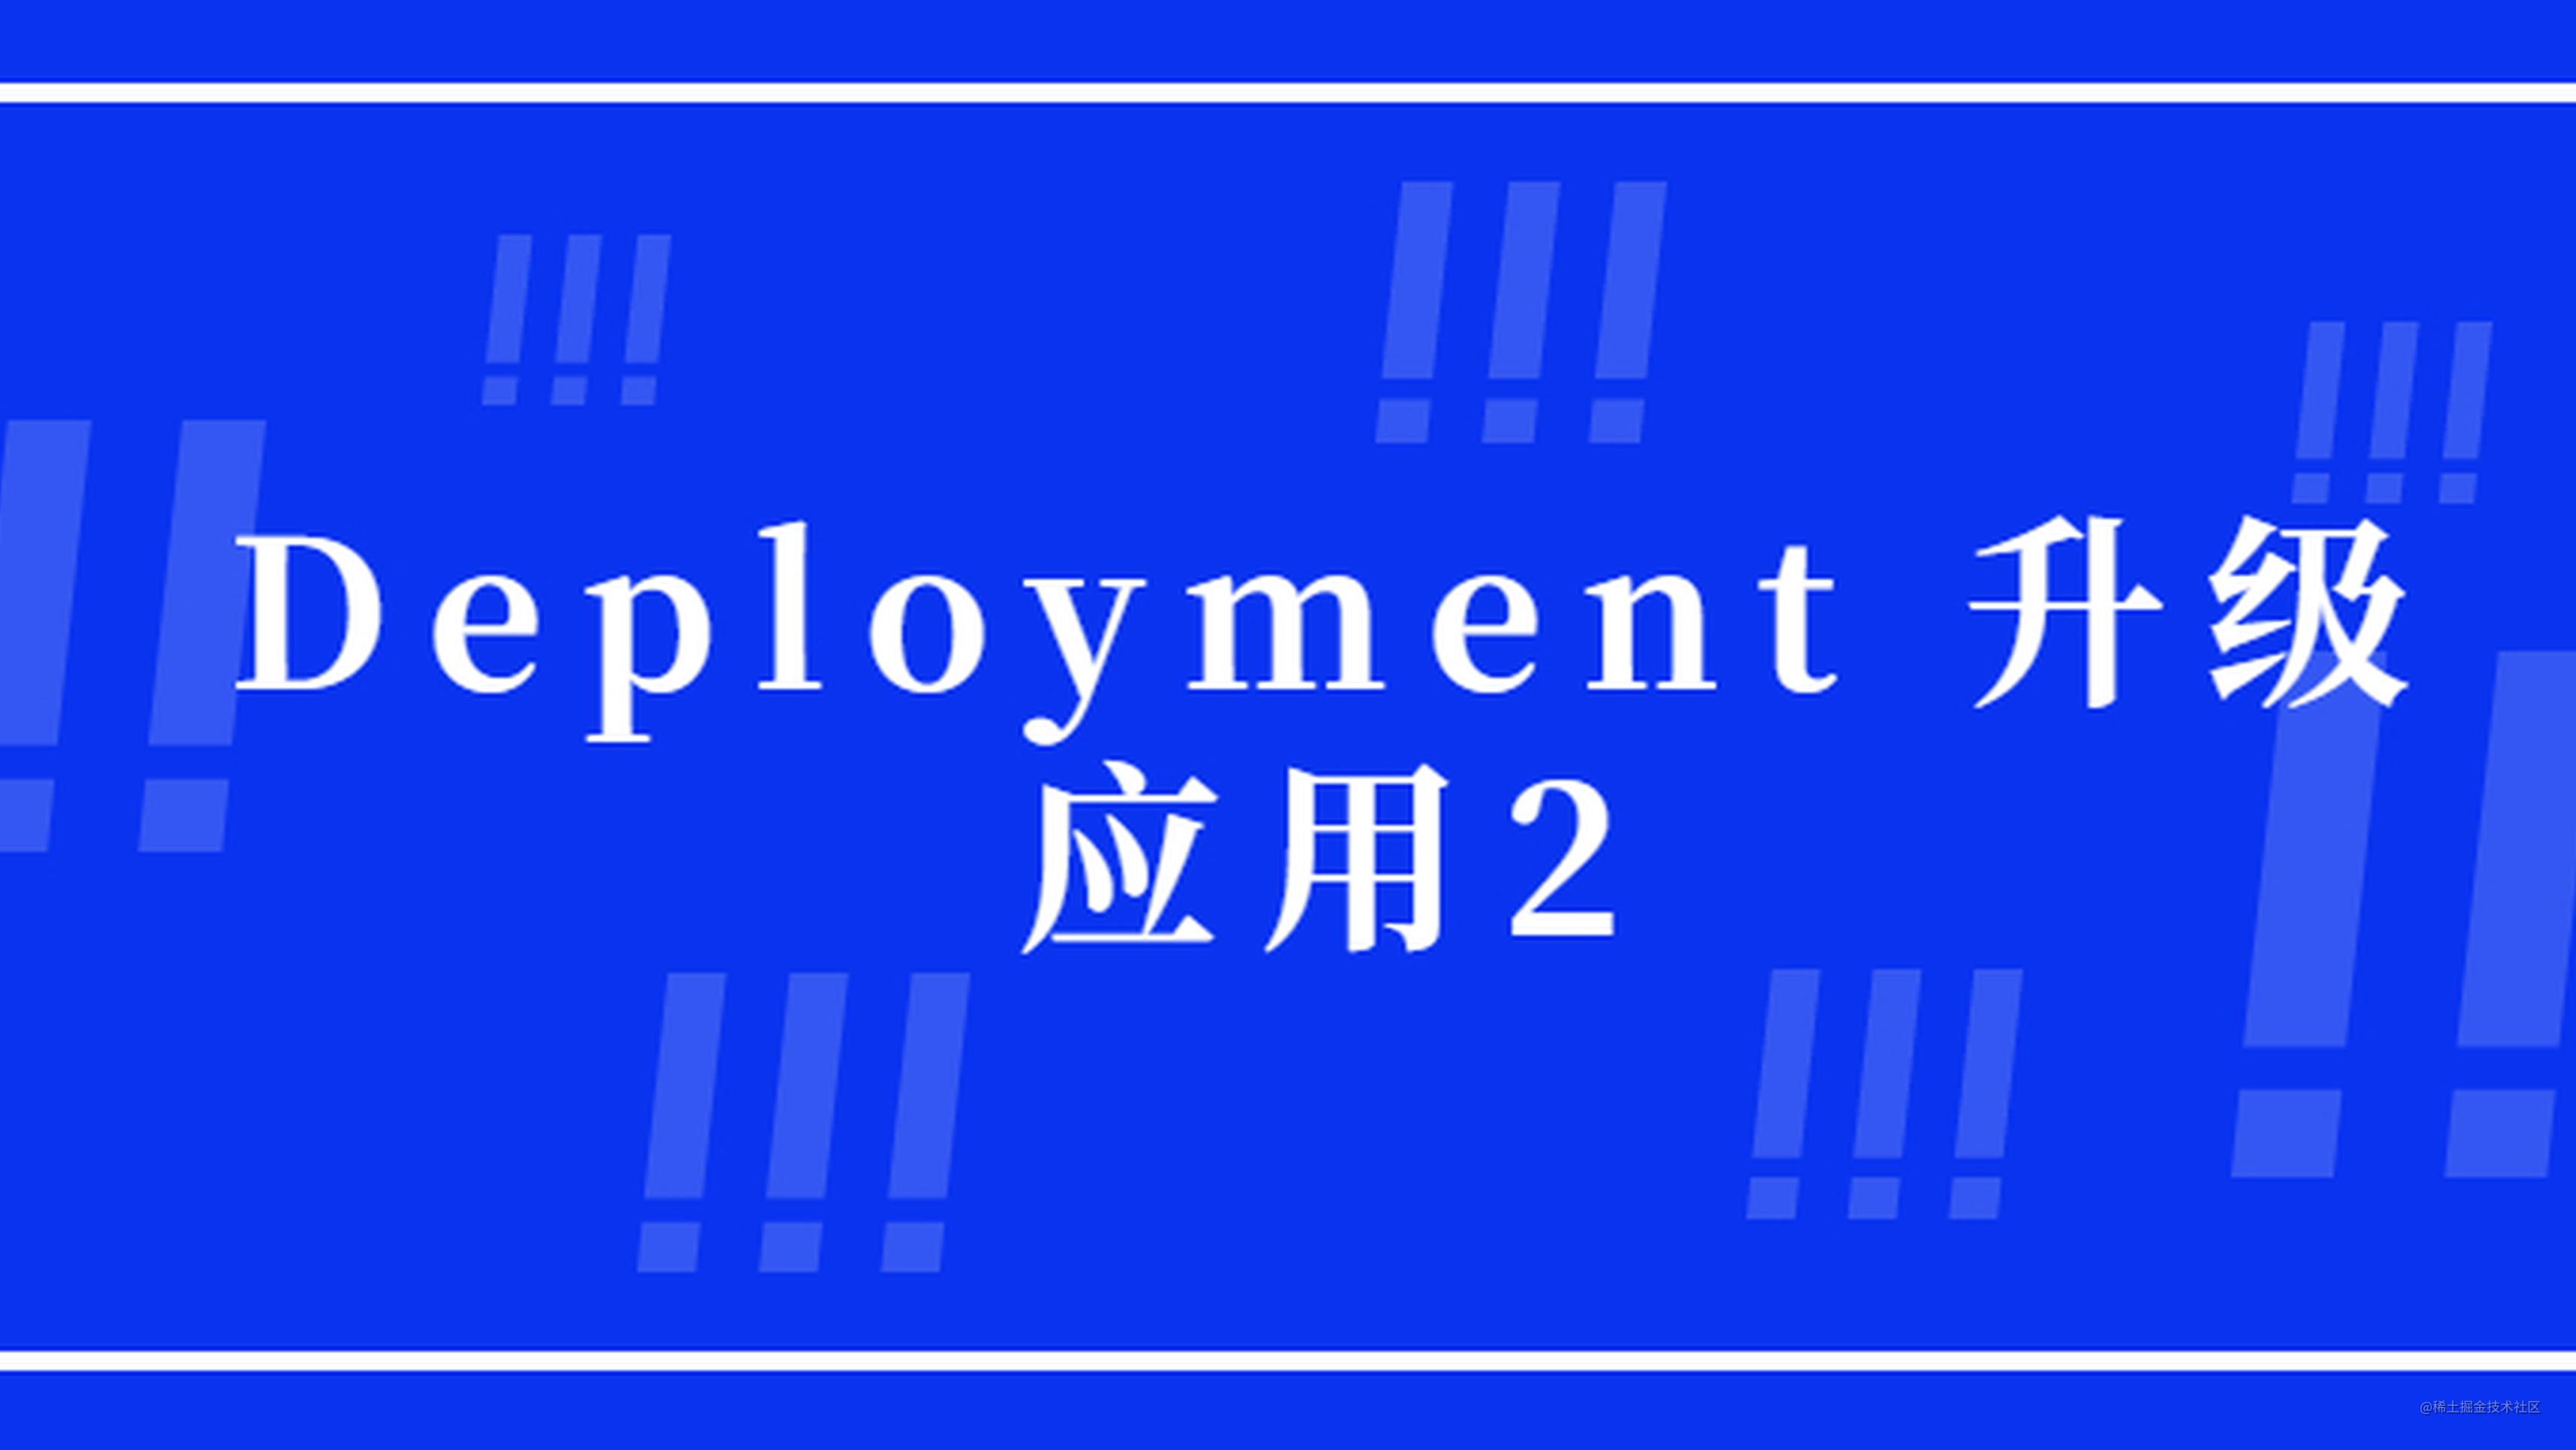 【k8s 系列】k8s 学习二十五-3，Deployment 升级应用2